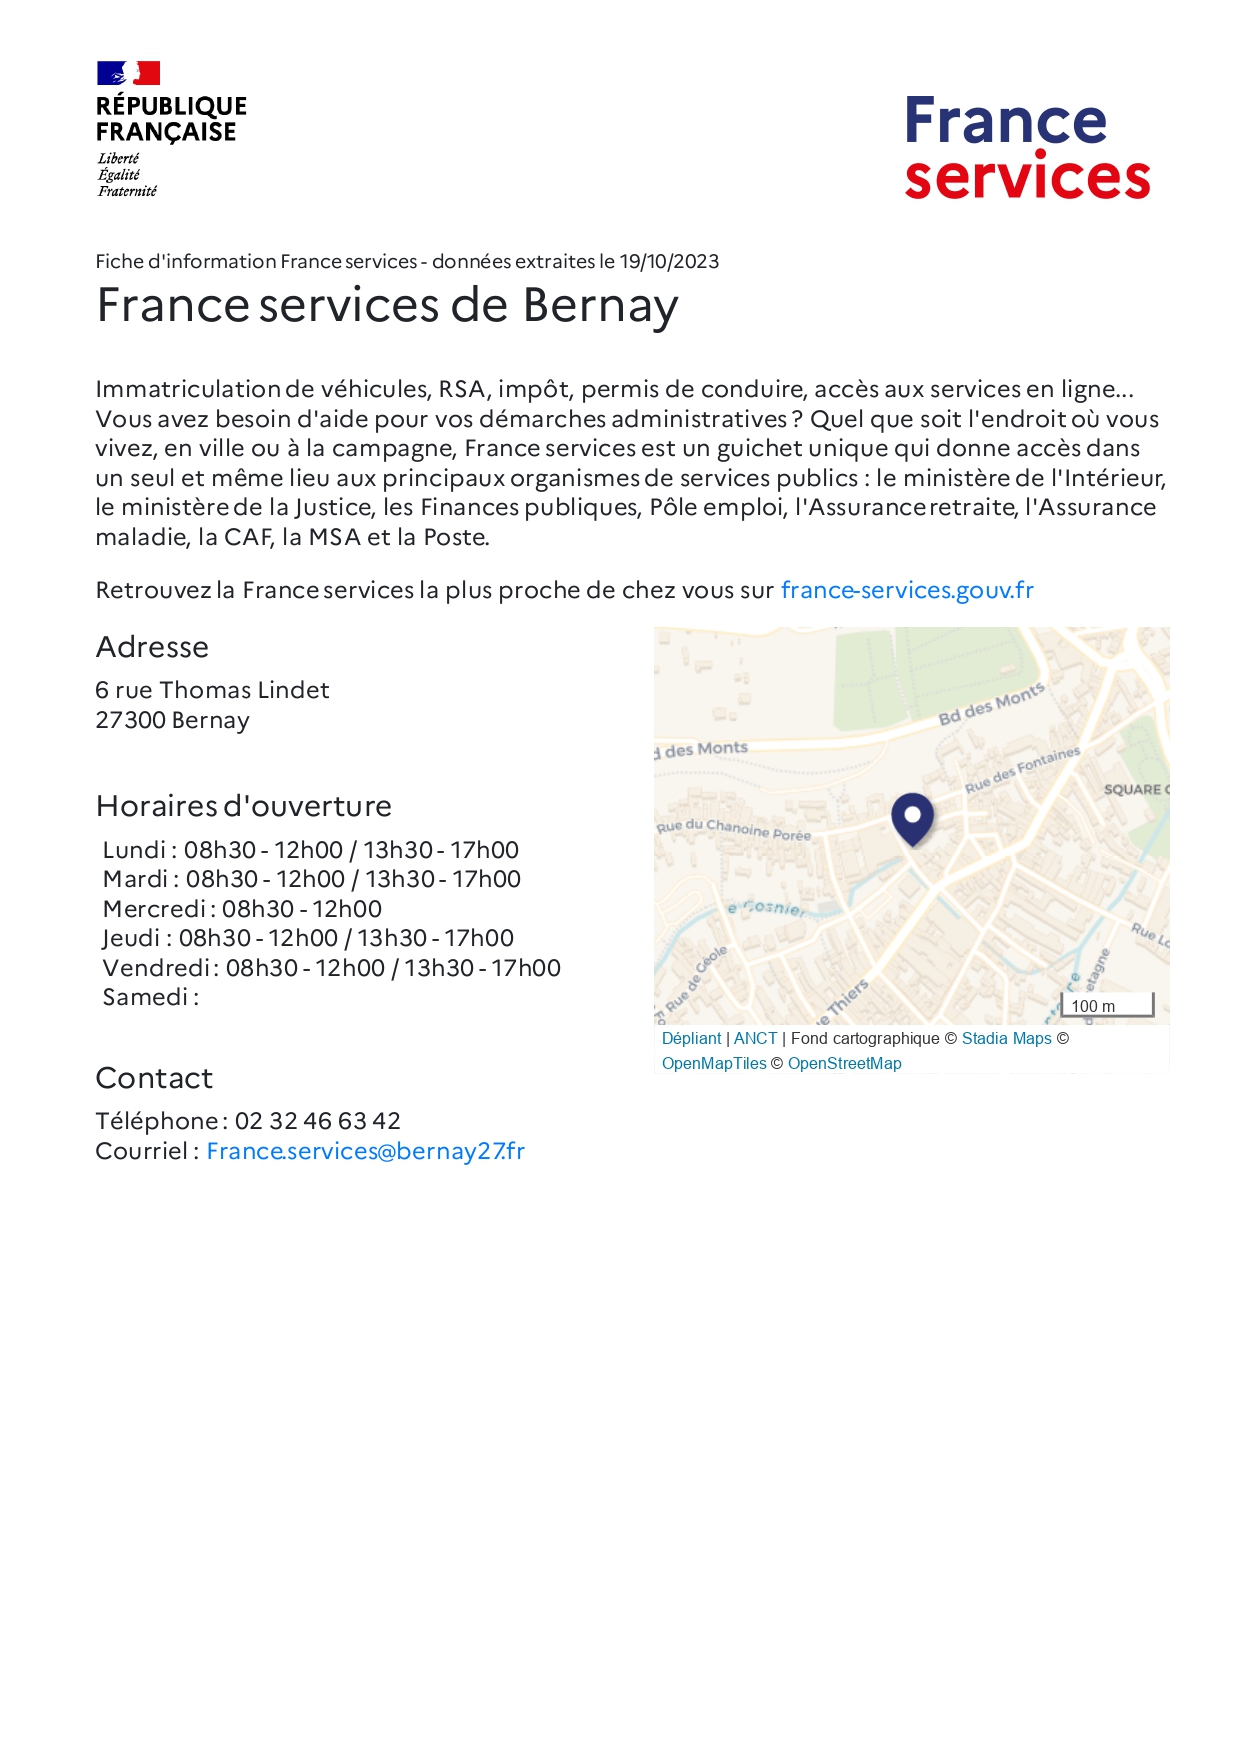 france services fiche 2595 page 0001